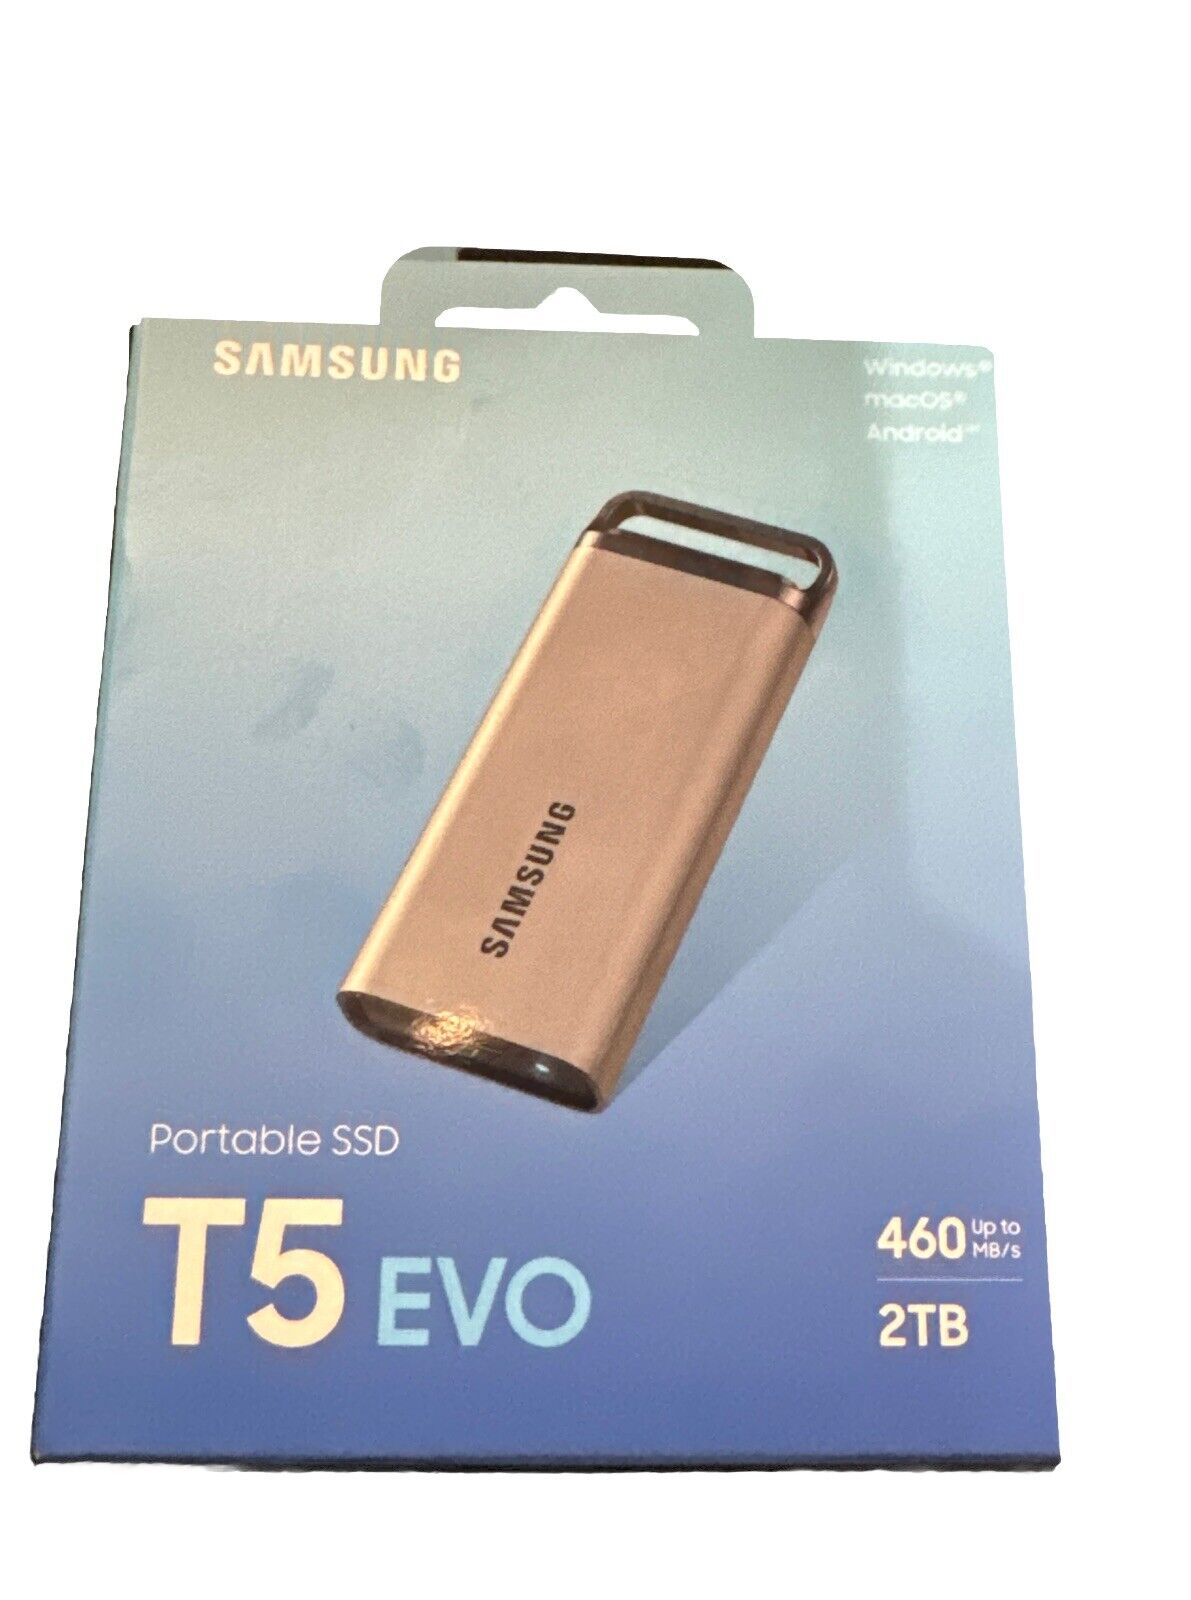 SAMSUNG PORTABLE SSD T5 EVO 2TB (MU-PM2TOG/WW) New Factory Sealed